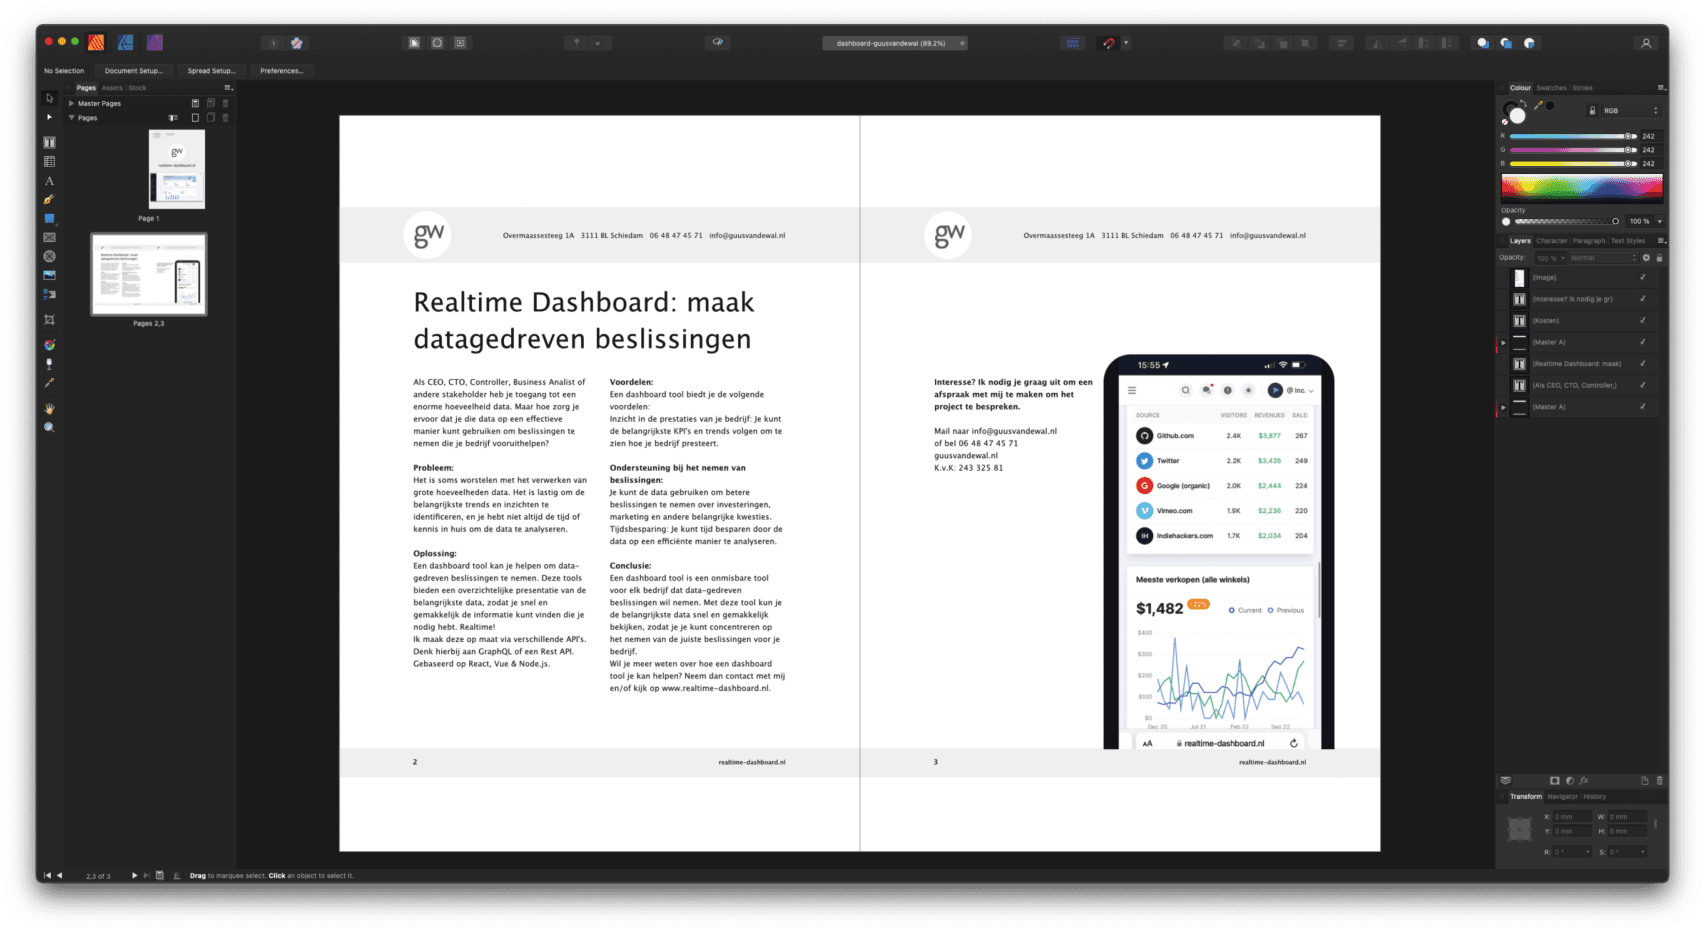 Download realtime dashboard PDF